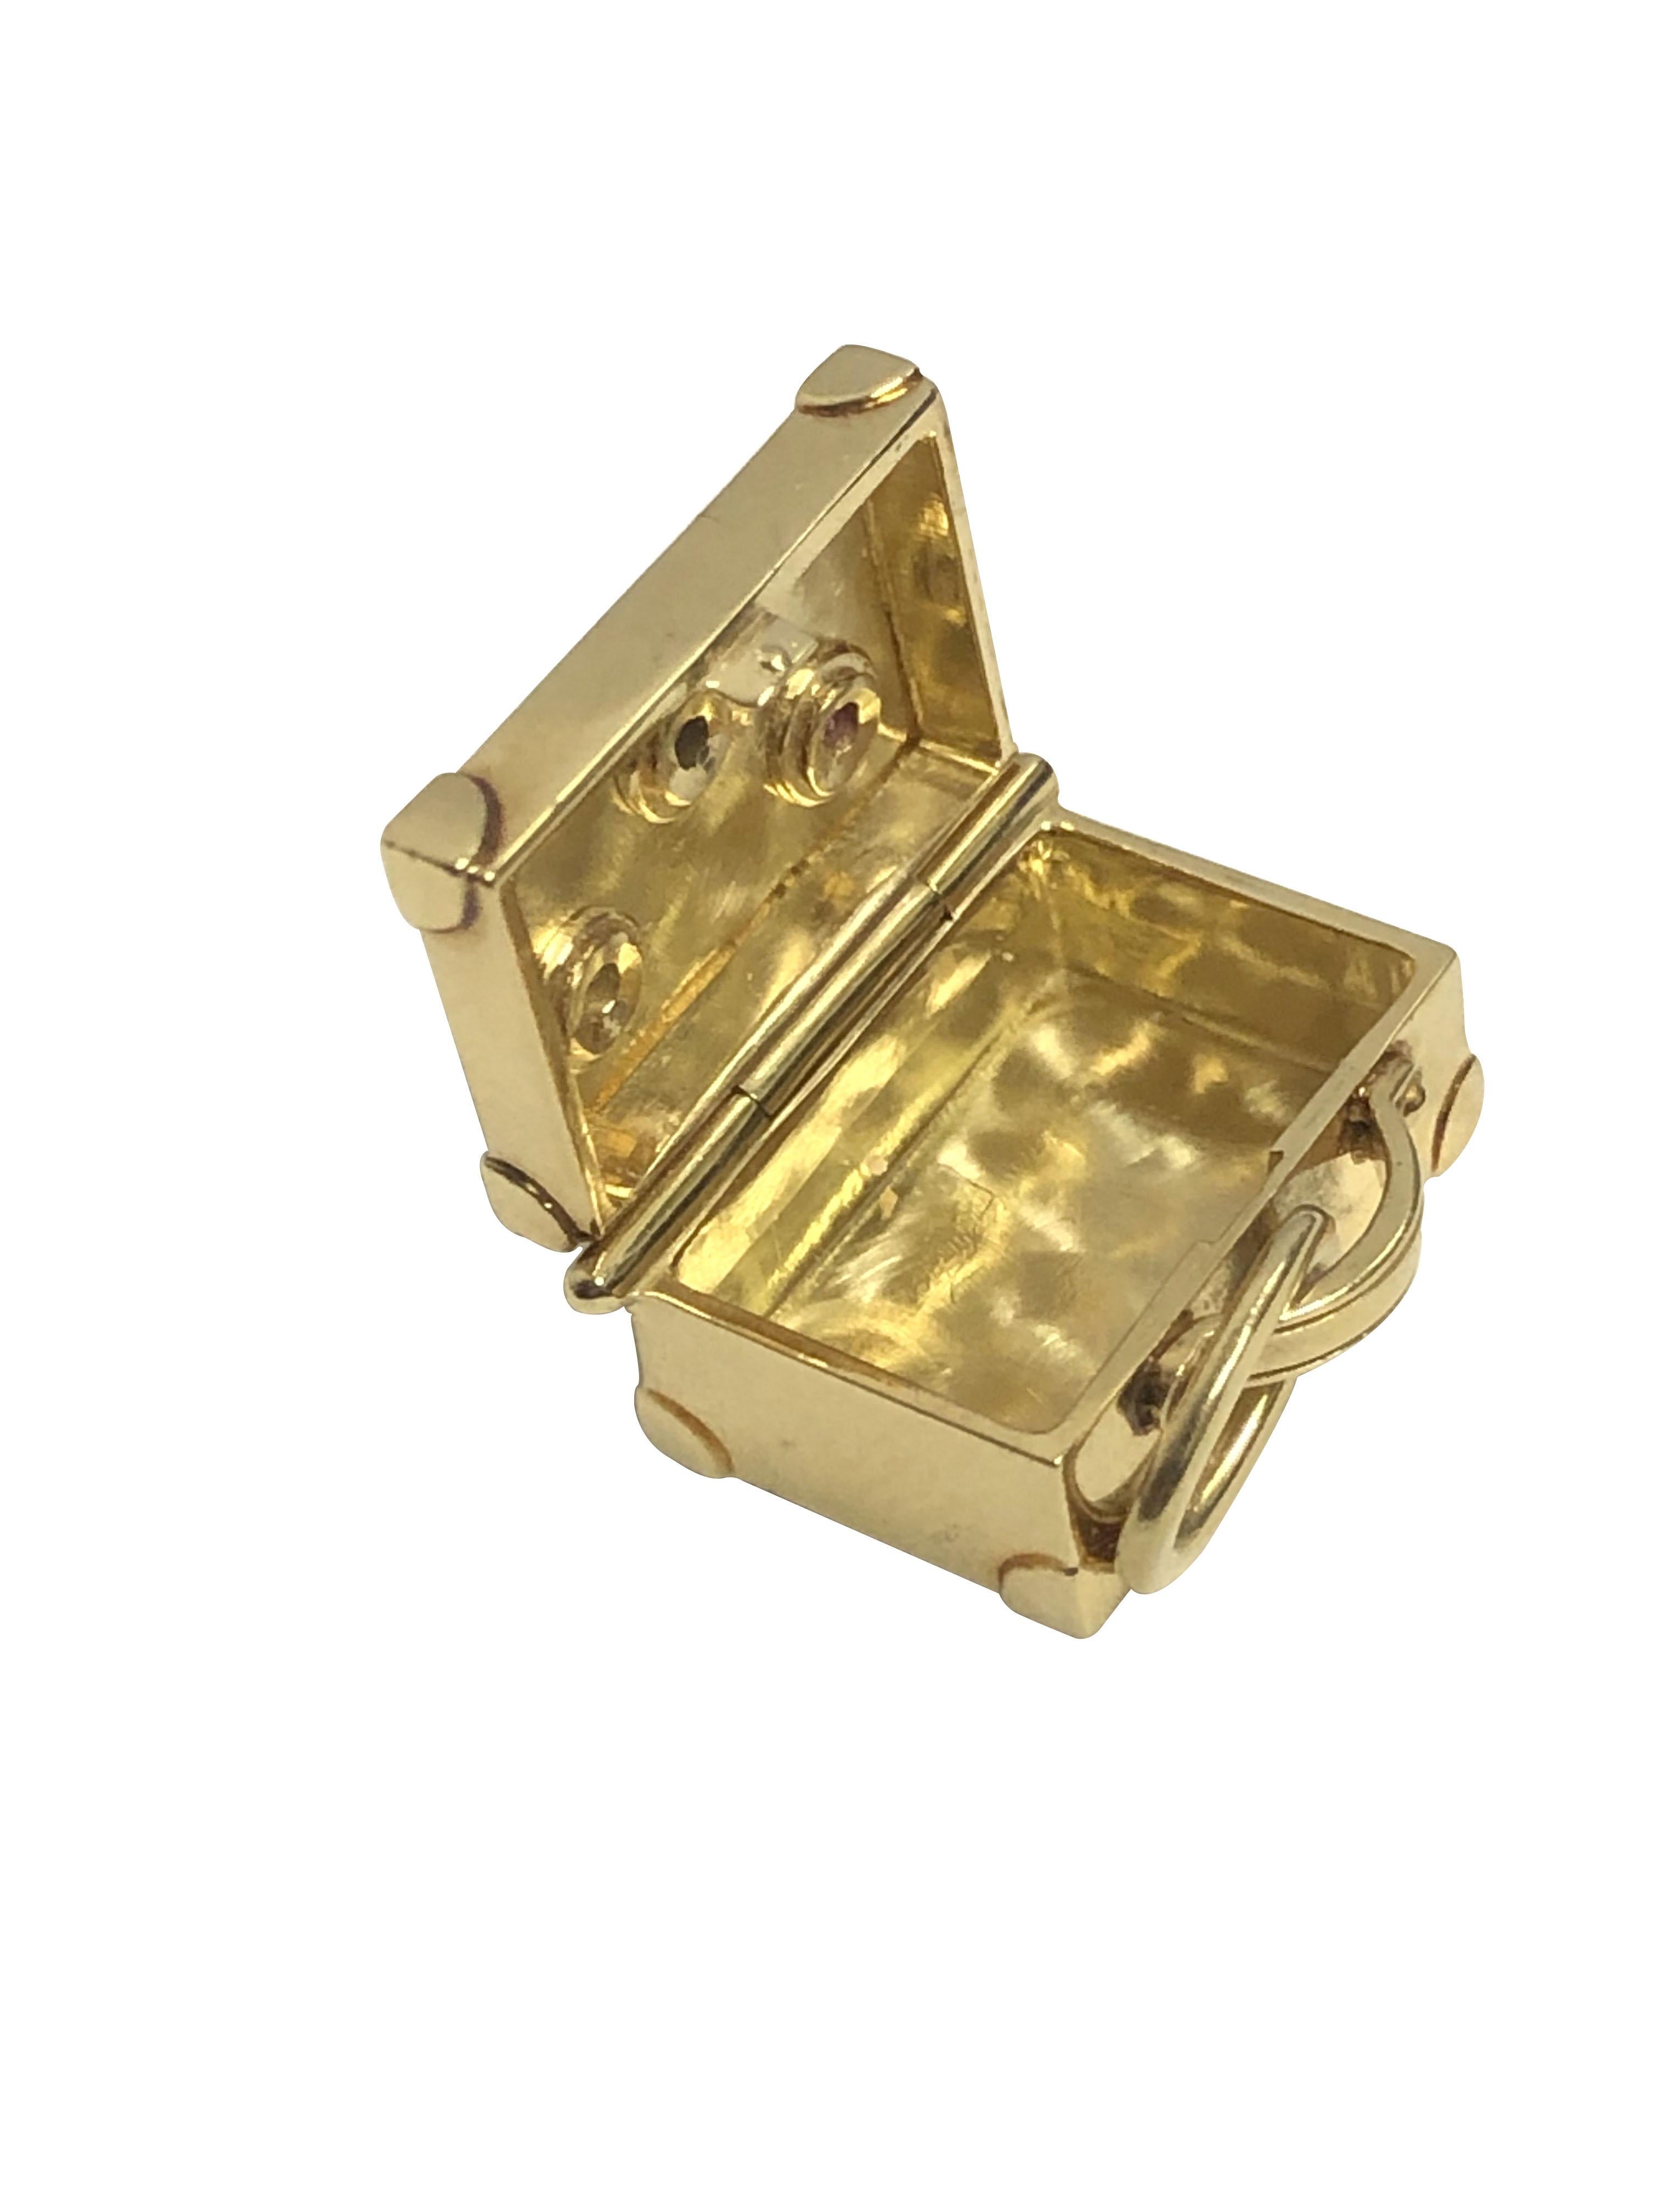 Tiffany & Co. Gold and Gem Set Suitcase Charm Pendant 2